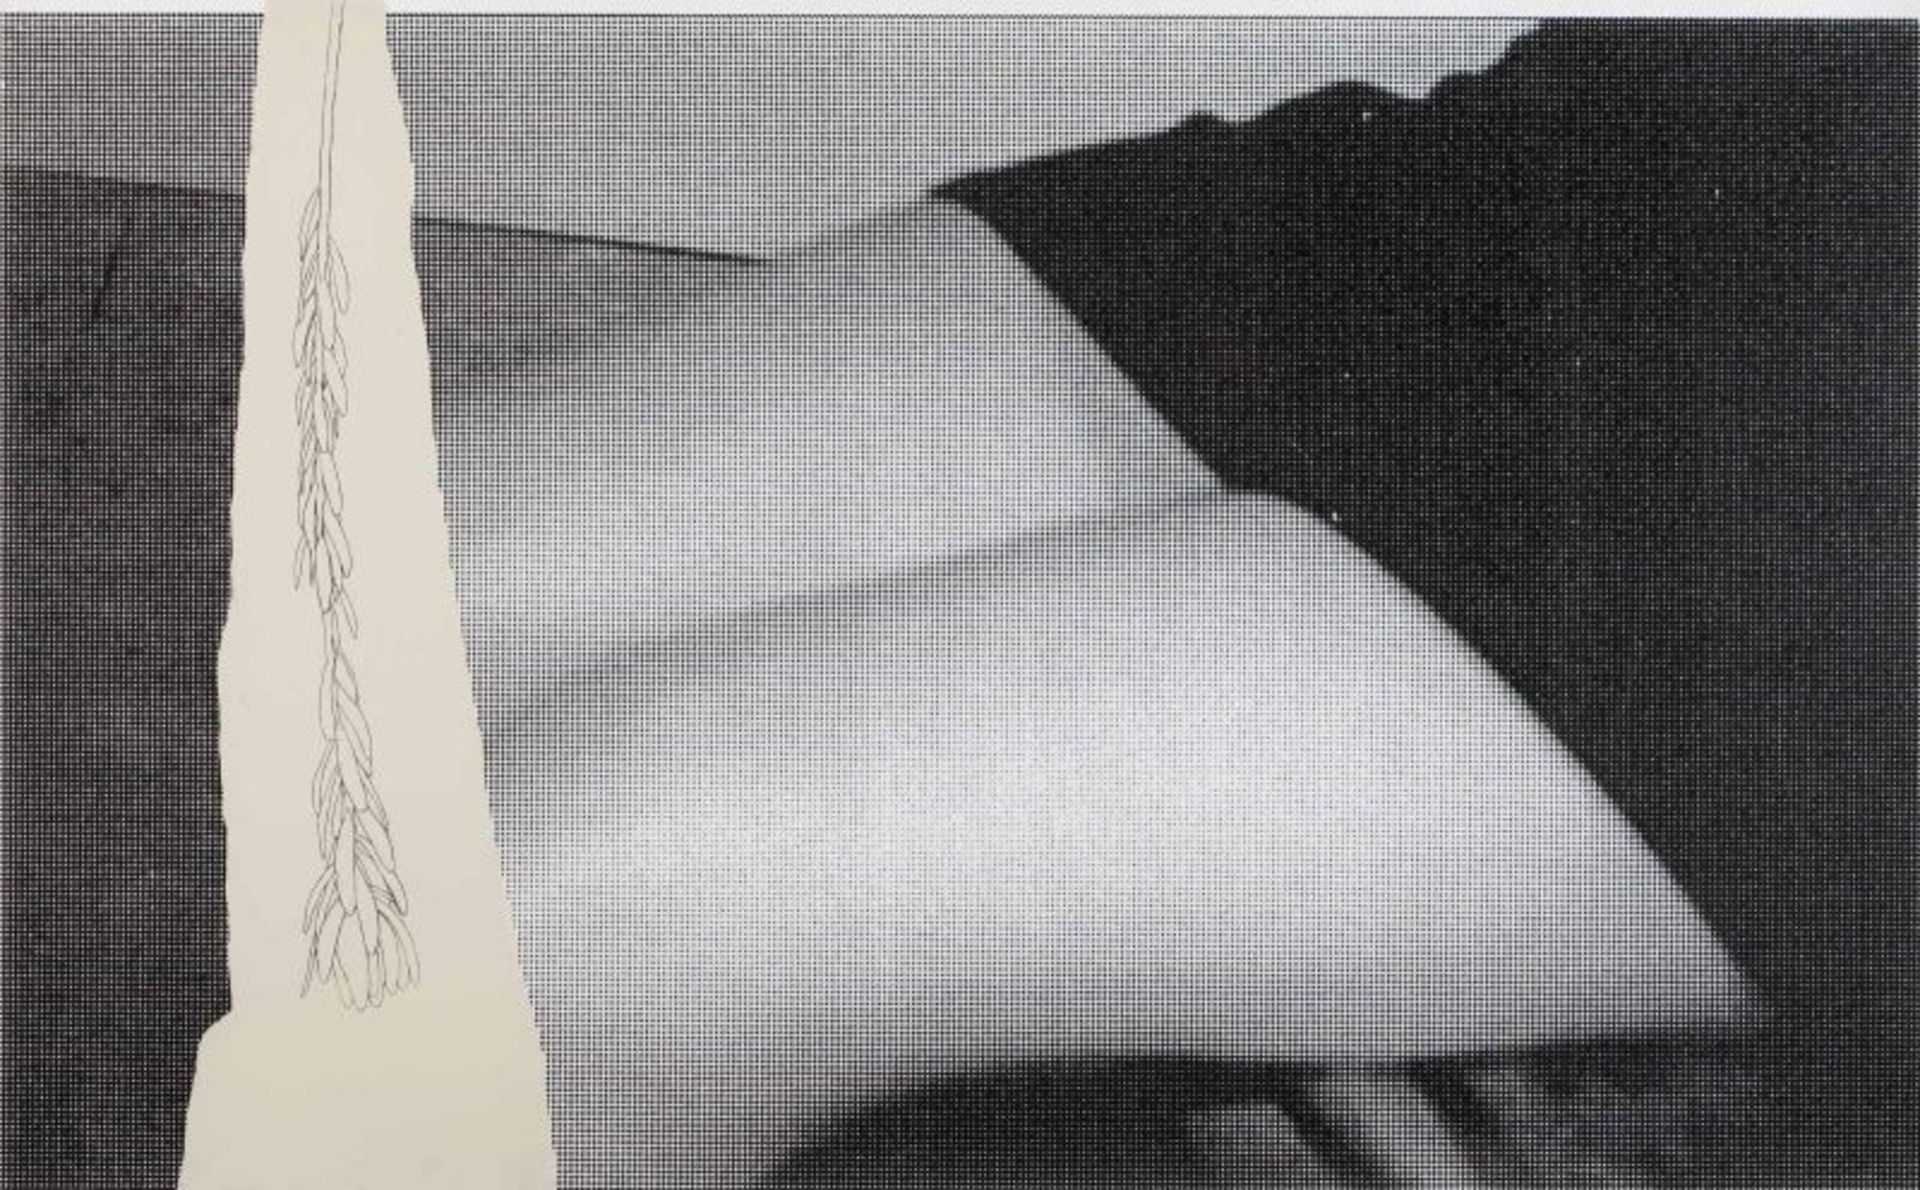 Julião Sarmento (n. 1948)"AIC"Giclée digital print and silkscreen on watercolor paper, 310